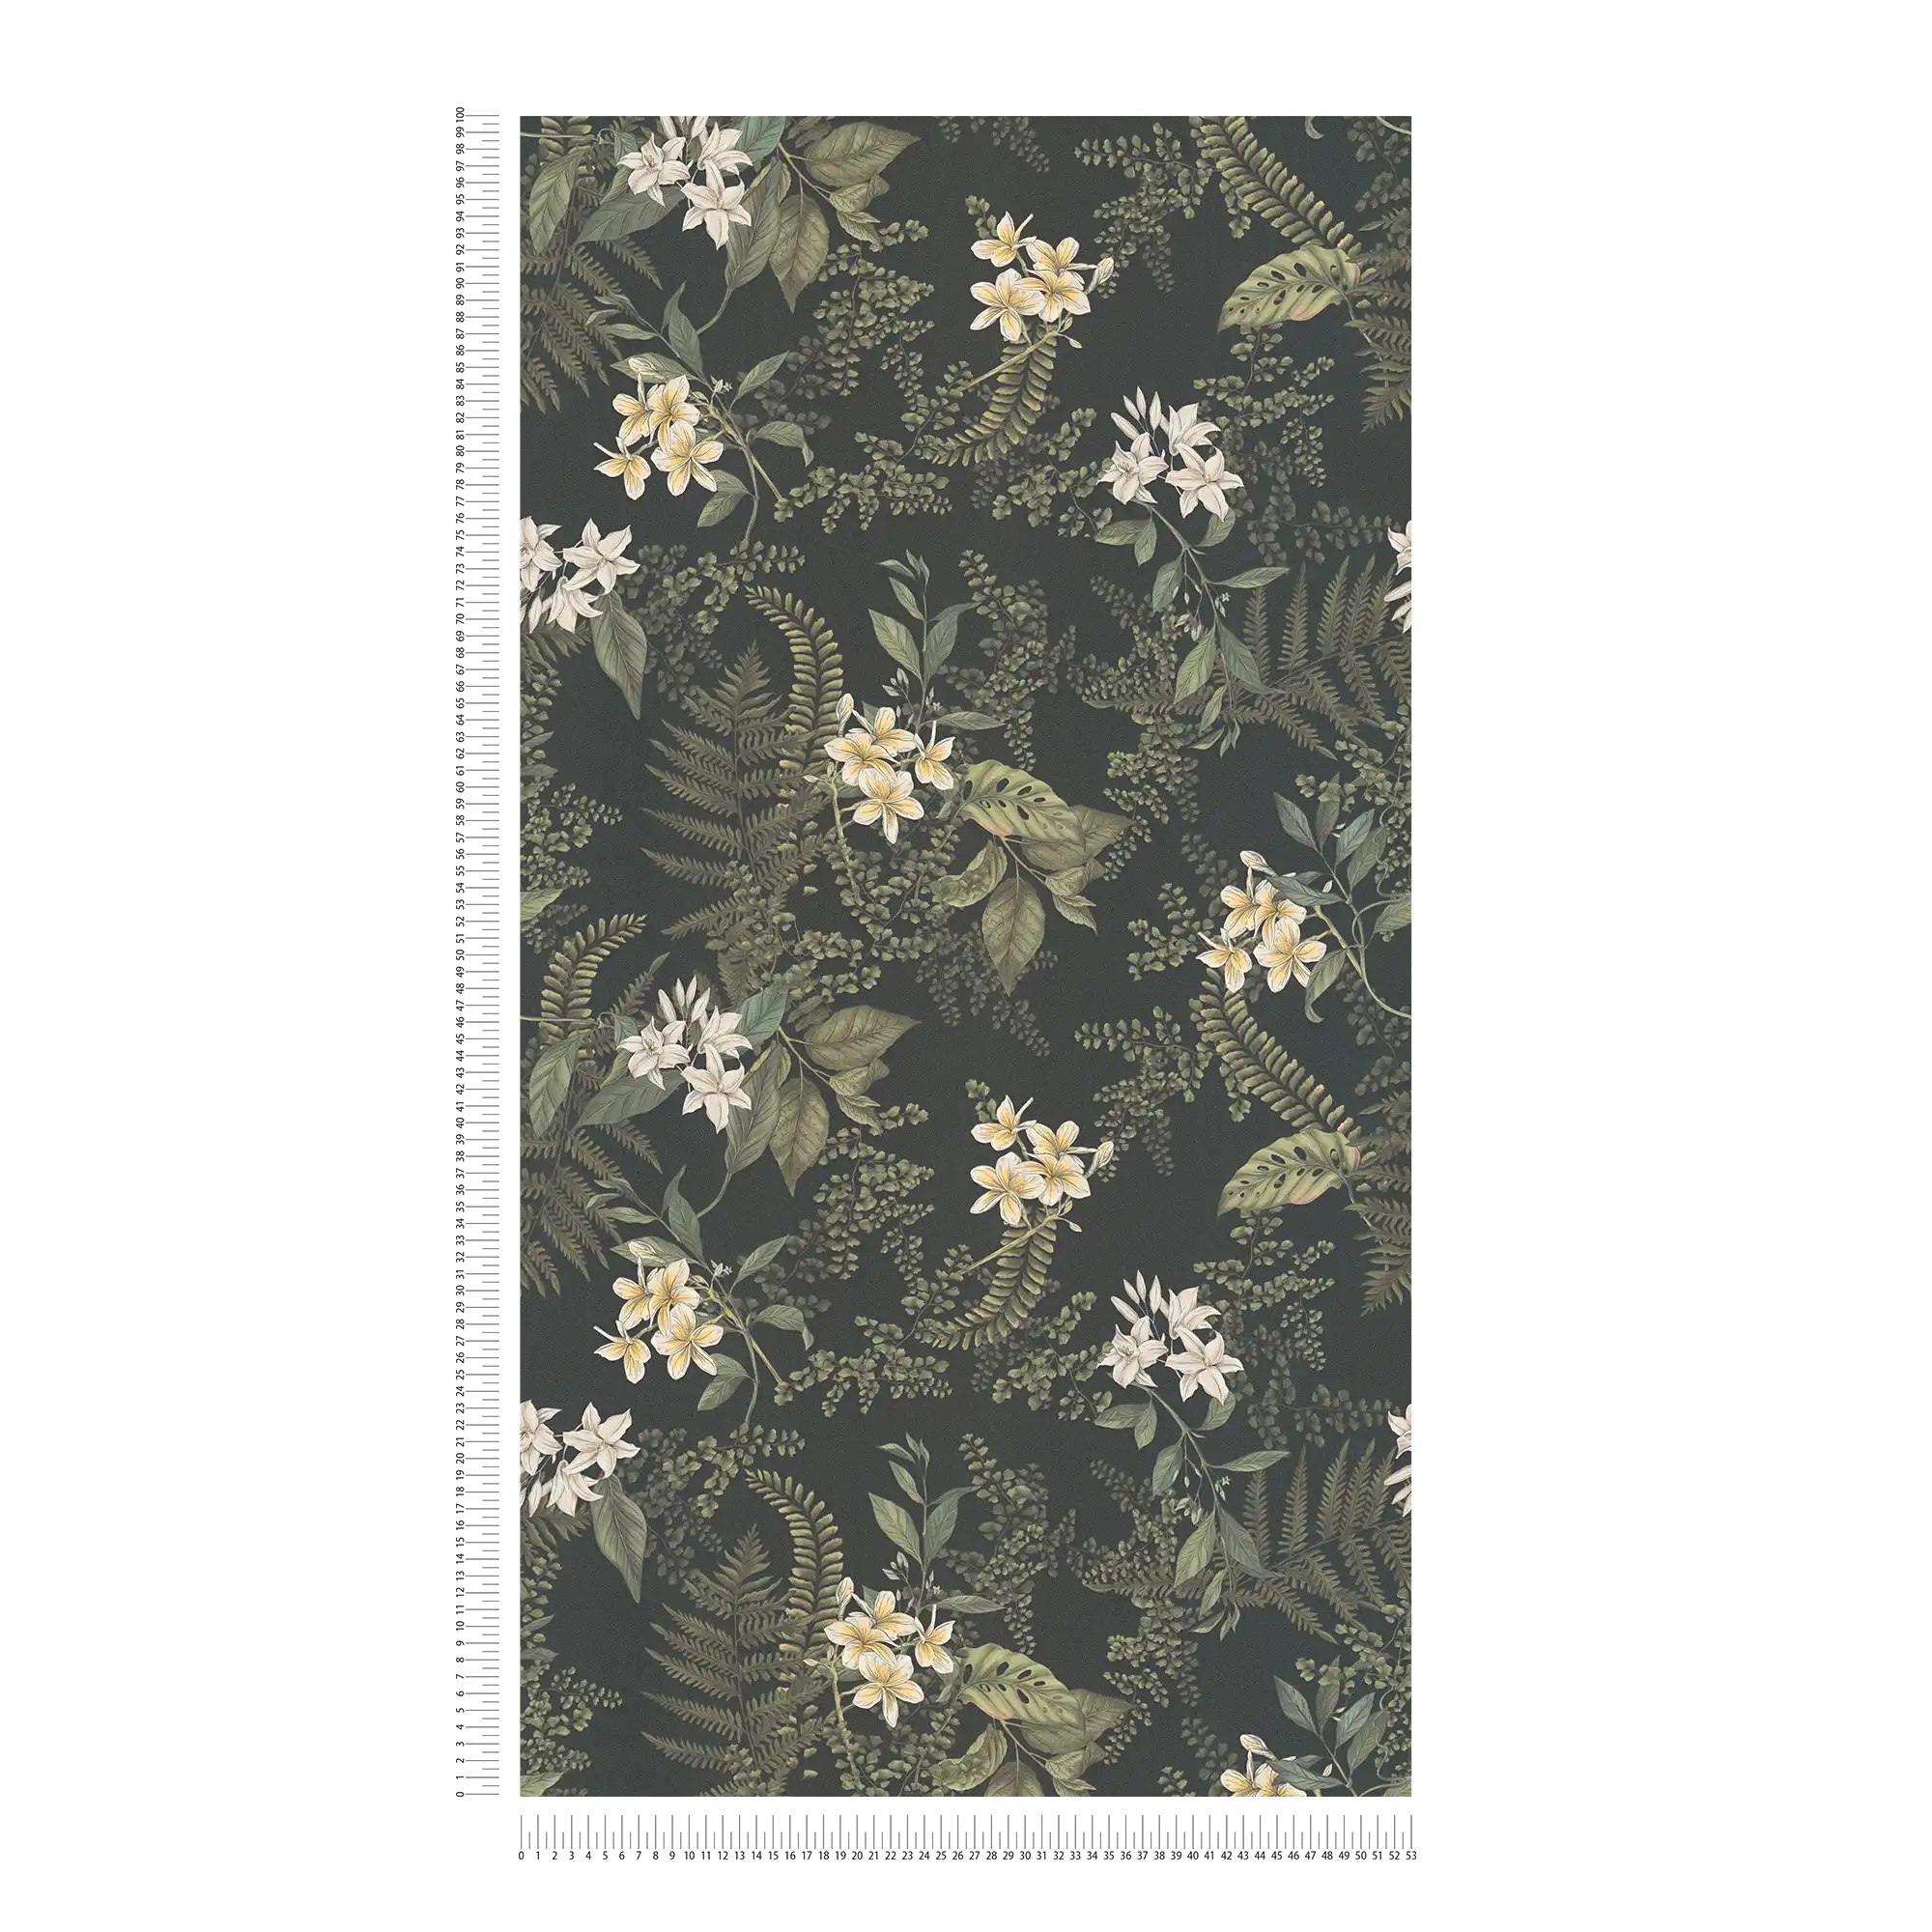             Modern wallpaper floral with flowers & grasses textured matt - black, dark green, white
        